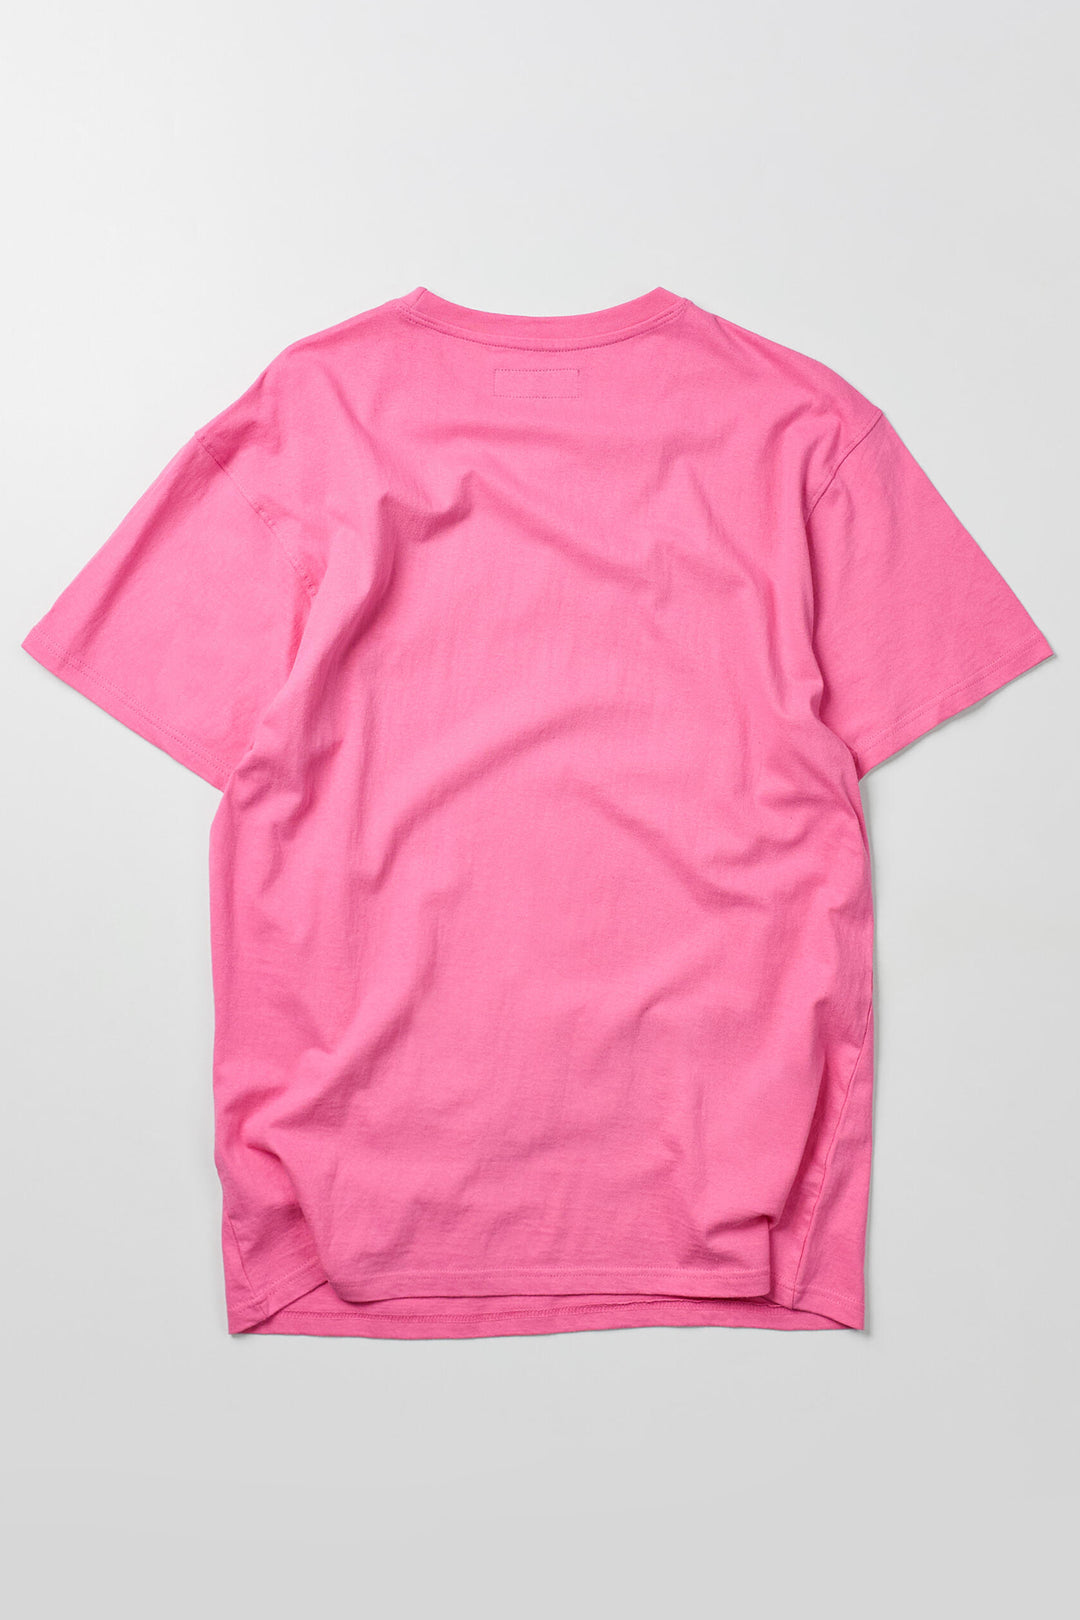 Licensed Dipset Killa Cam Tee (Pink) - Zamage